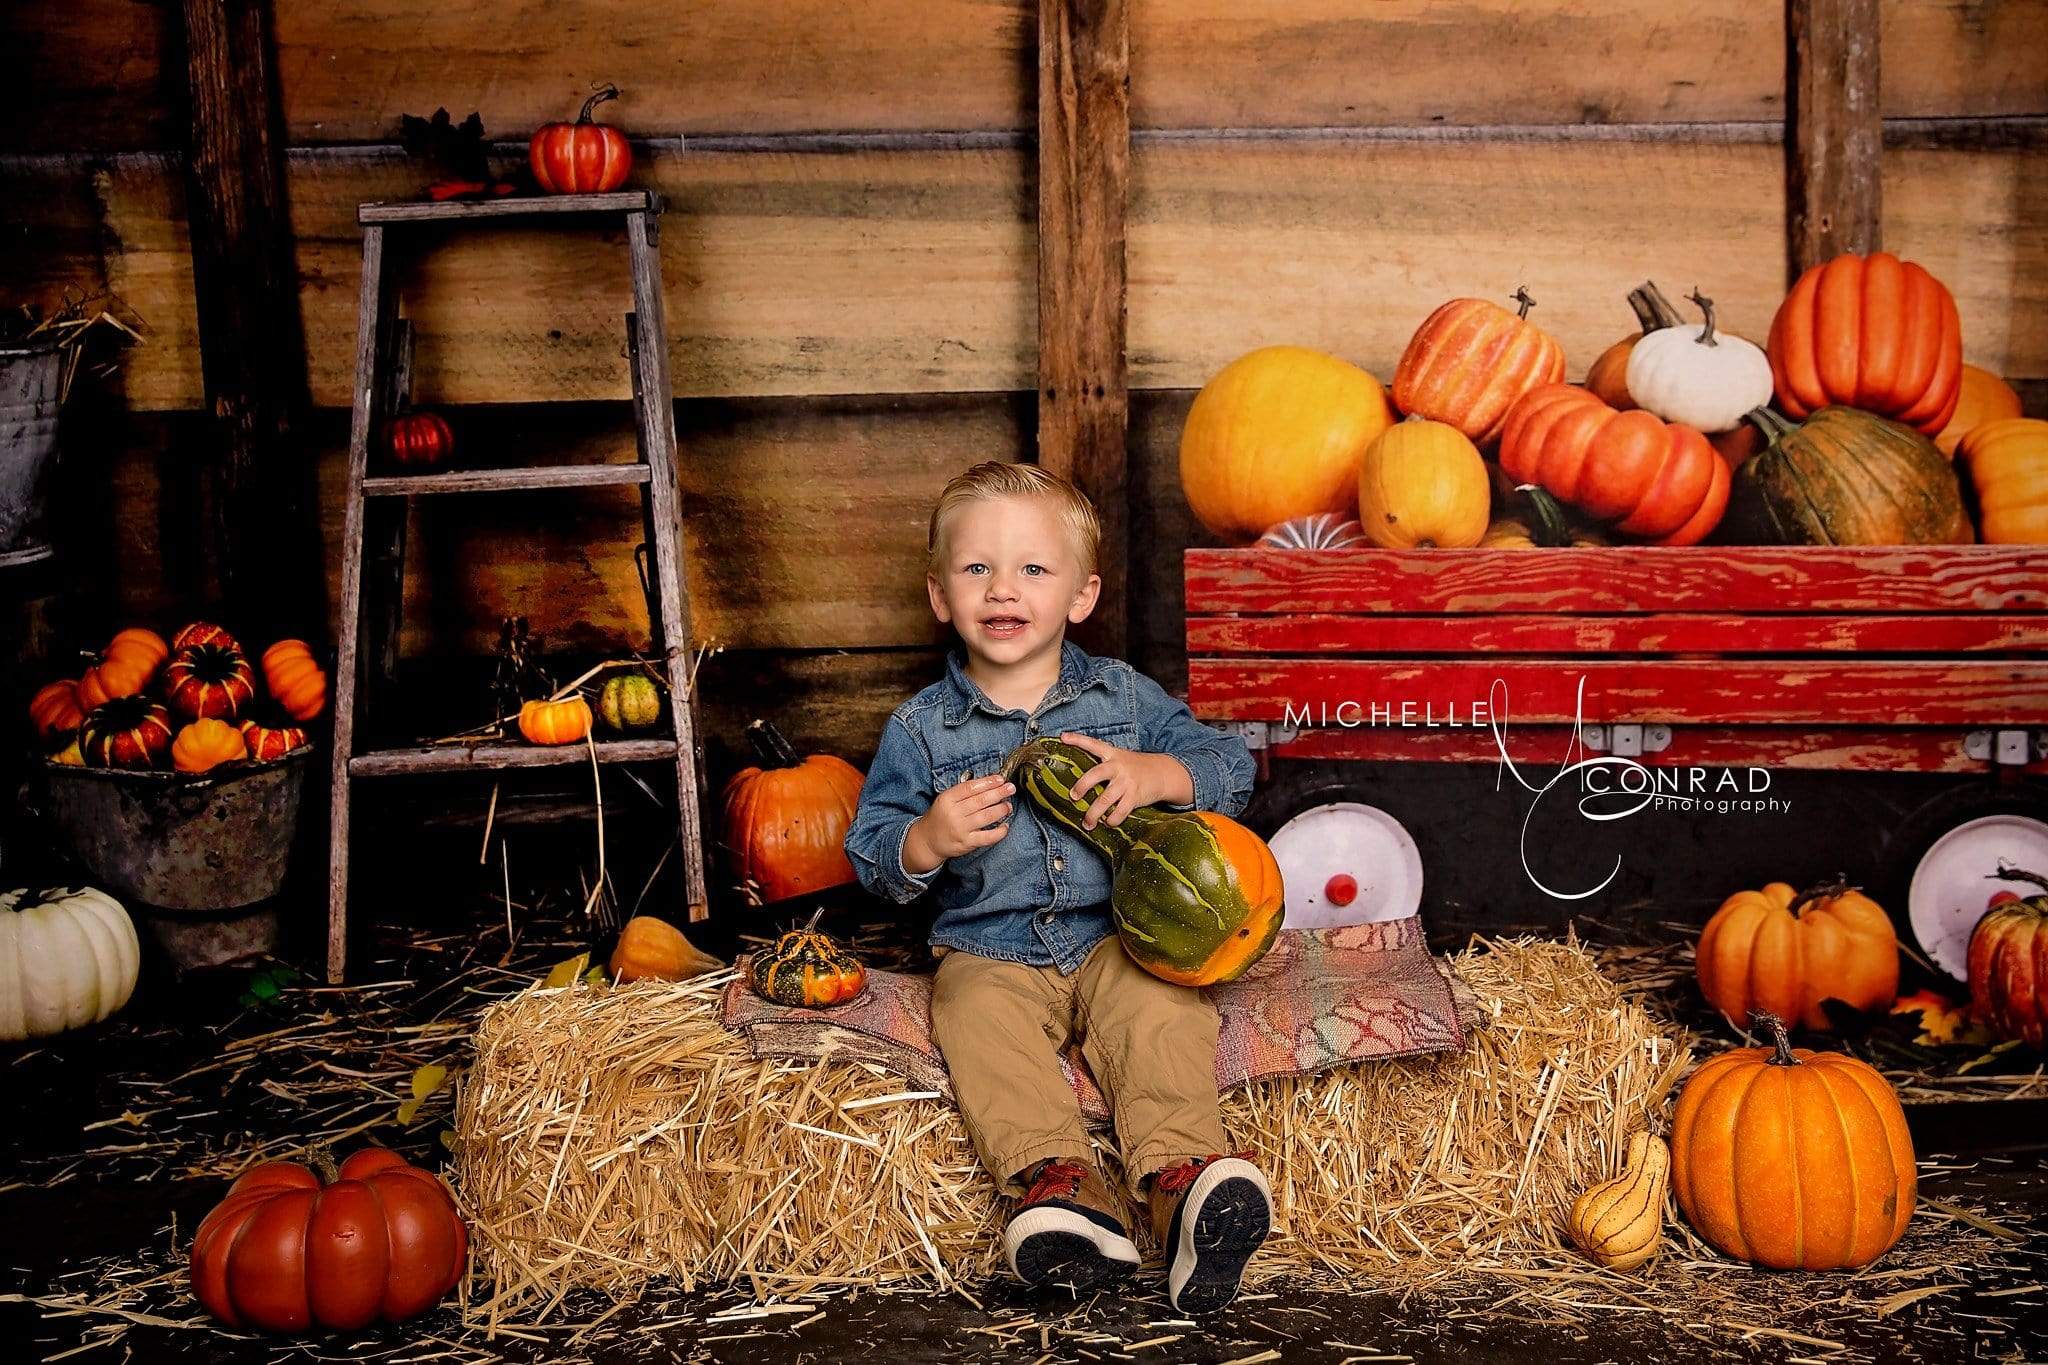 Katebackdrop£ºKate Pumpkin Harvest Backdrop Autumn and Halloween designed by Arica Kirby